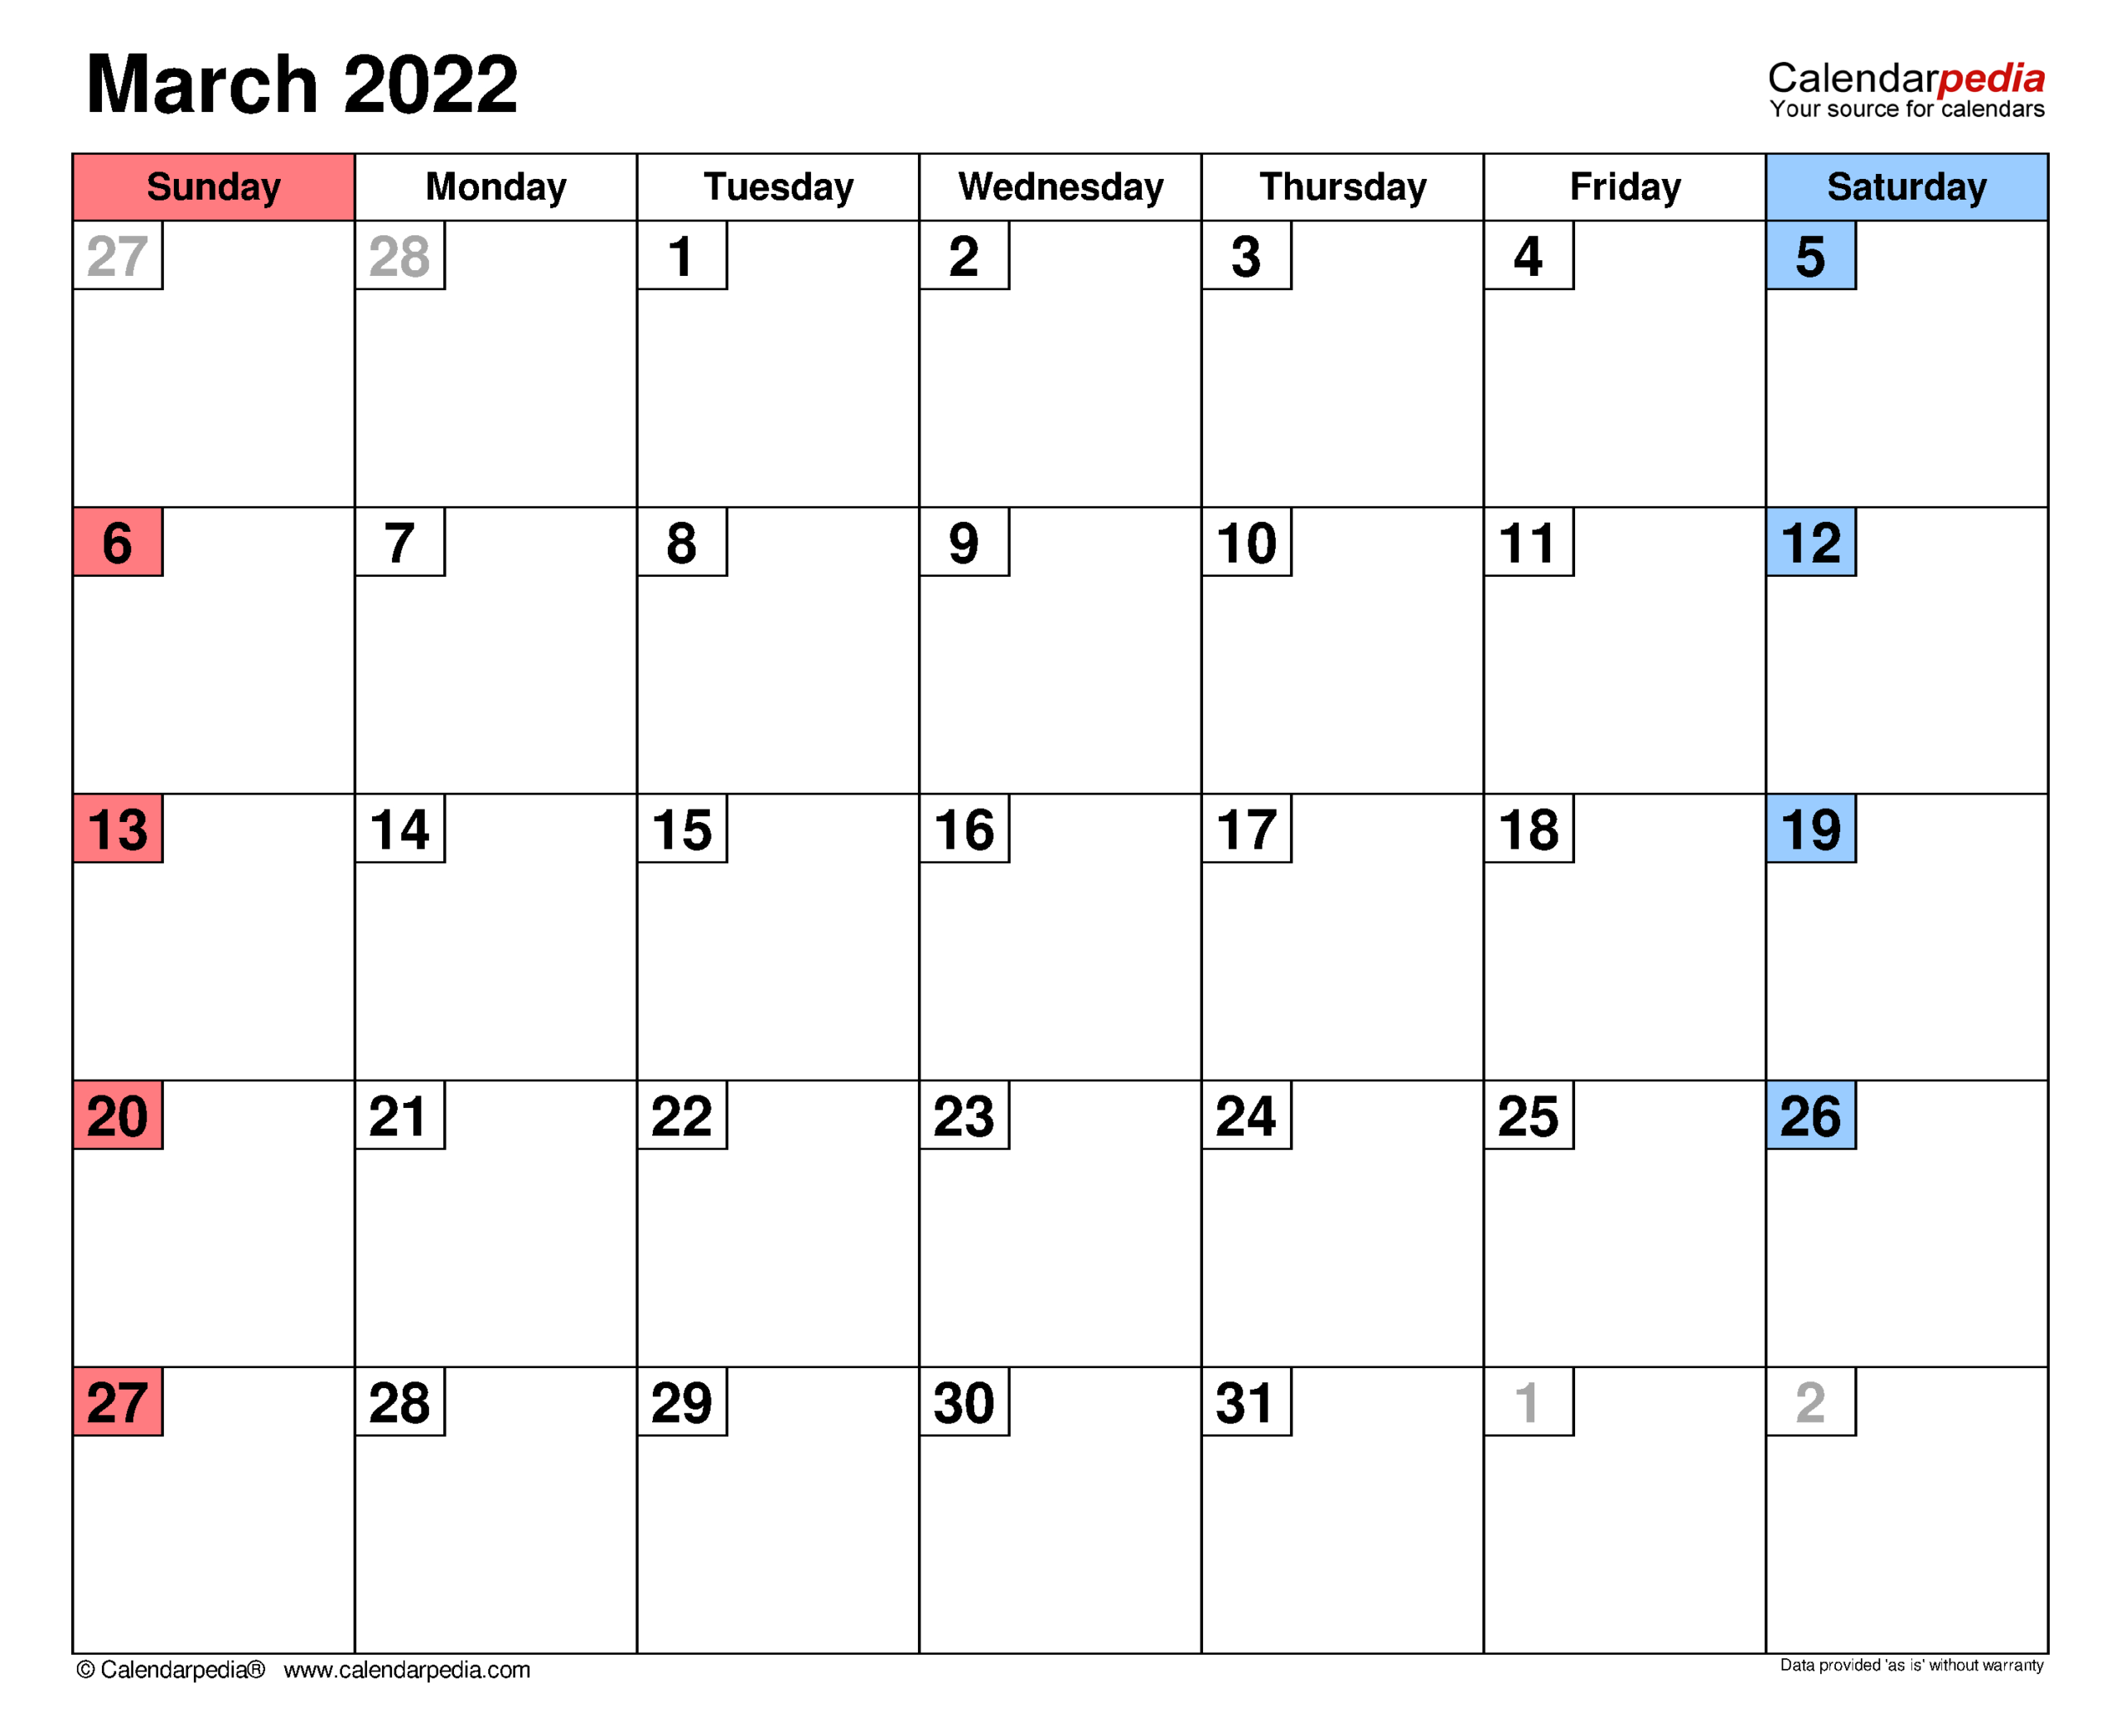 Get March 2022 Tithi Calendar